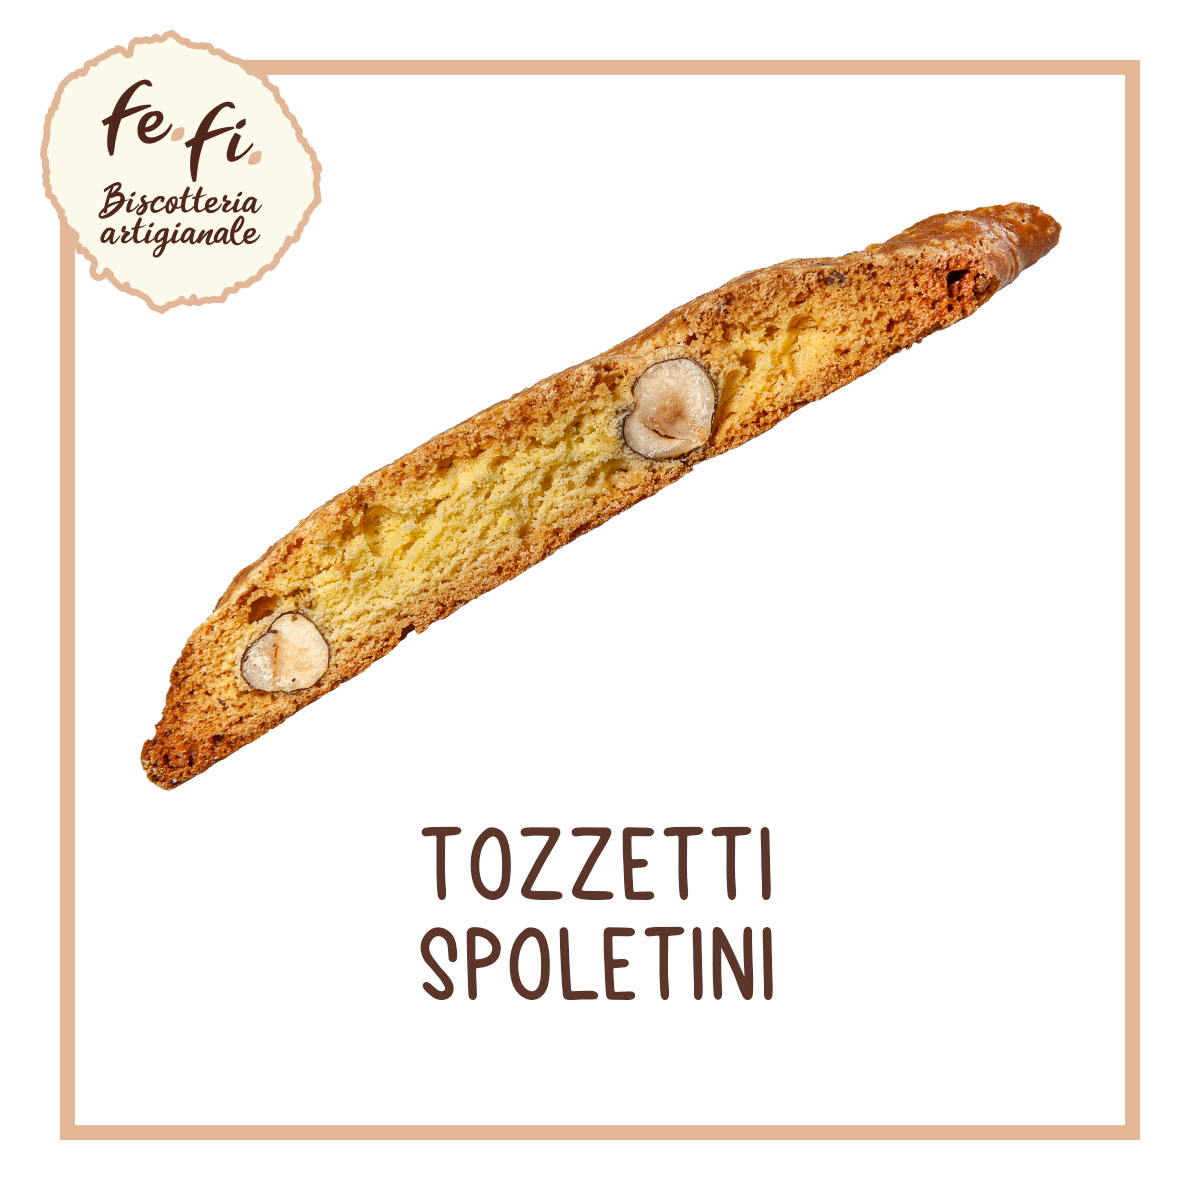 Tozzetti Spoletini – Biscotteria Artigianale Fe.Fi. Spoleto